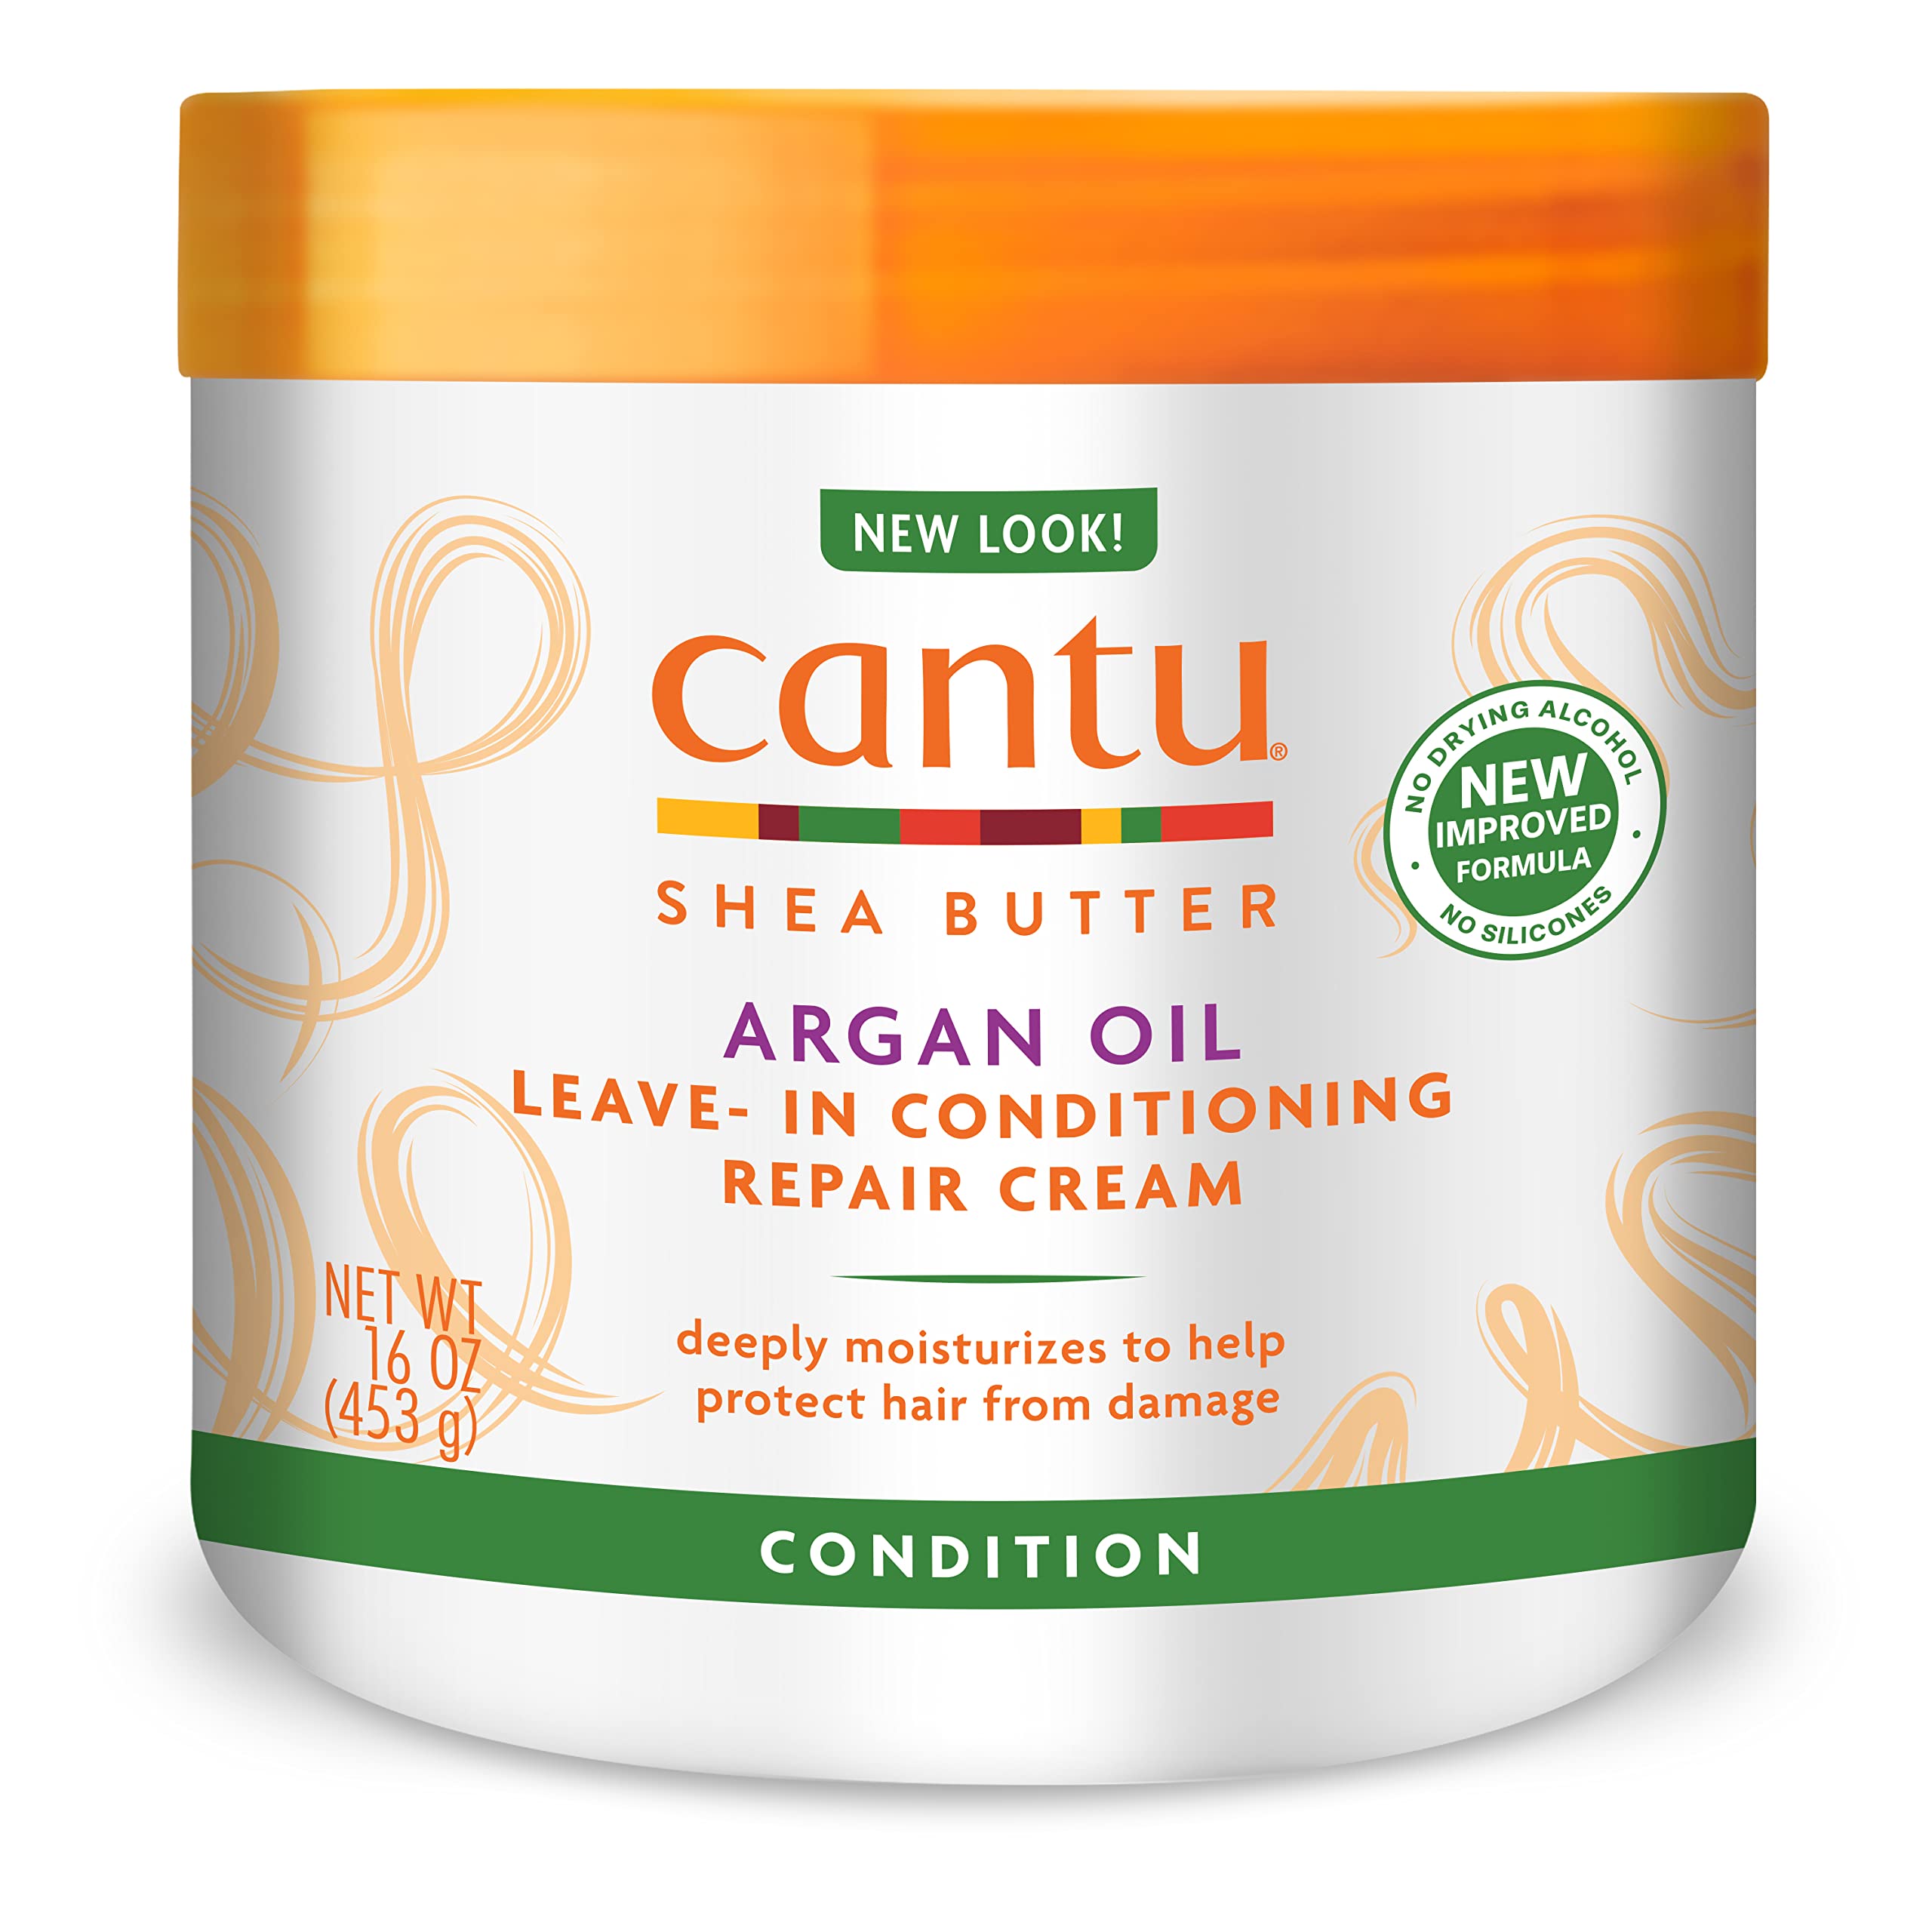 Cantu argan oil leave in conditioner repair cream - كريم إصلاح الشعر بزيت الأرغان بدون شطف